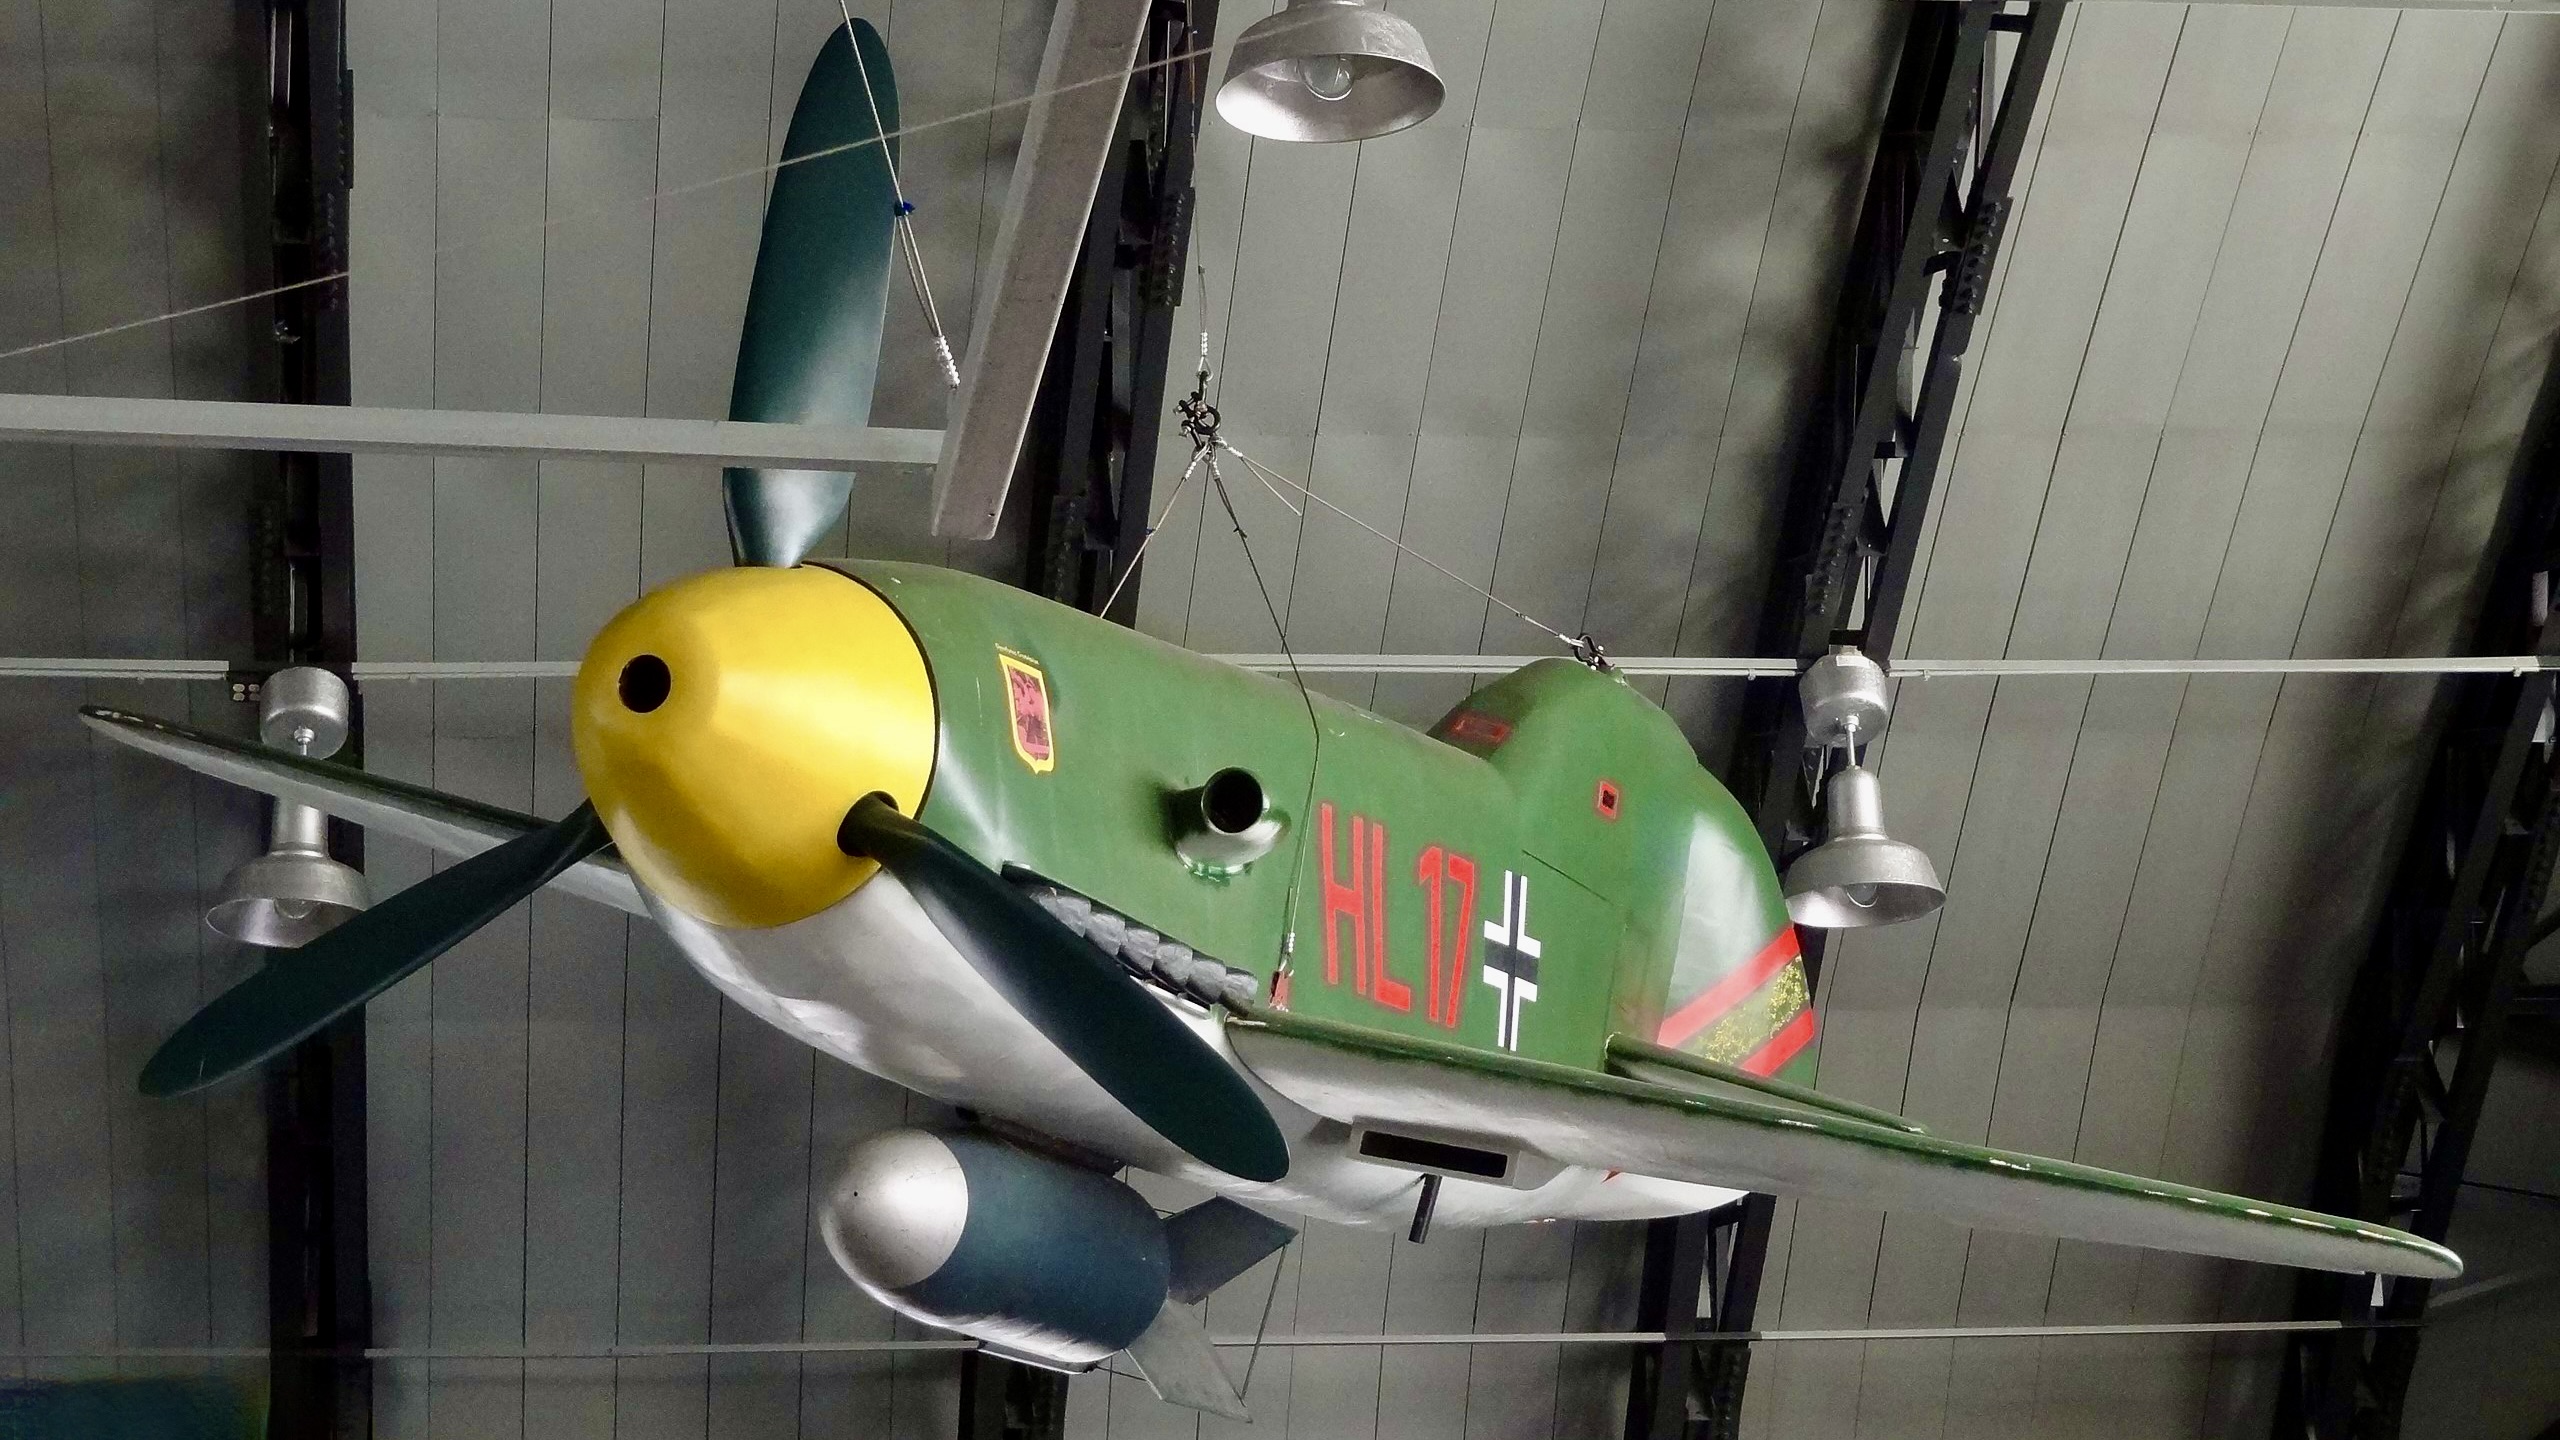 Hütter Hü 136 replica, located at the Military aviation museum in VA